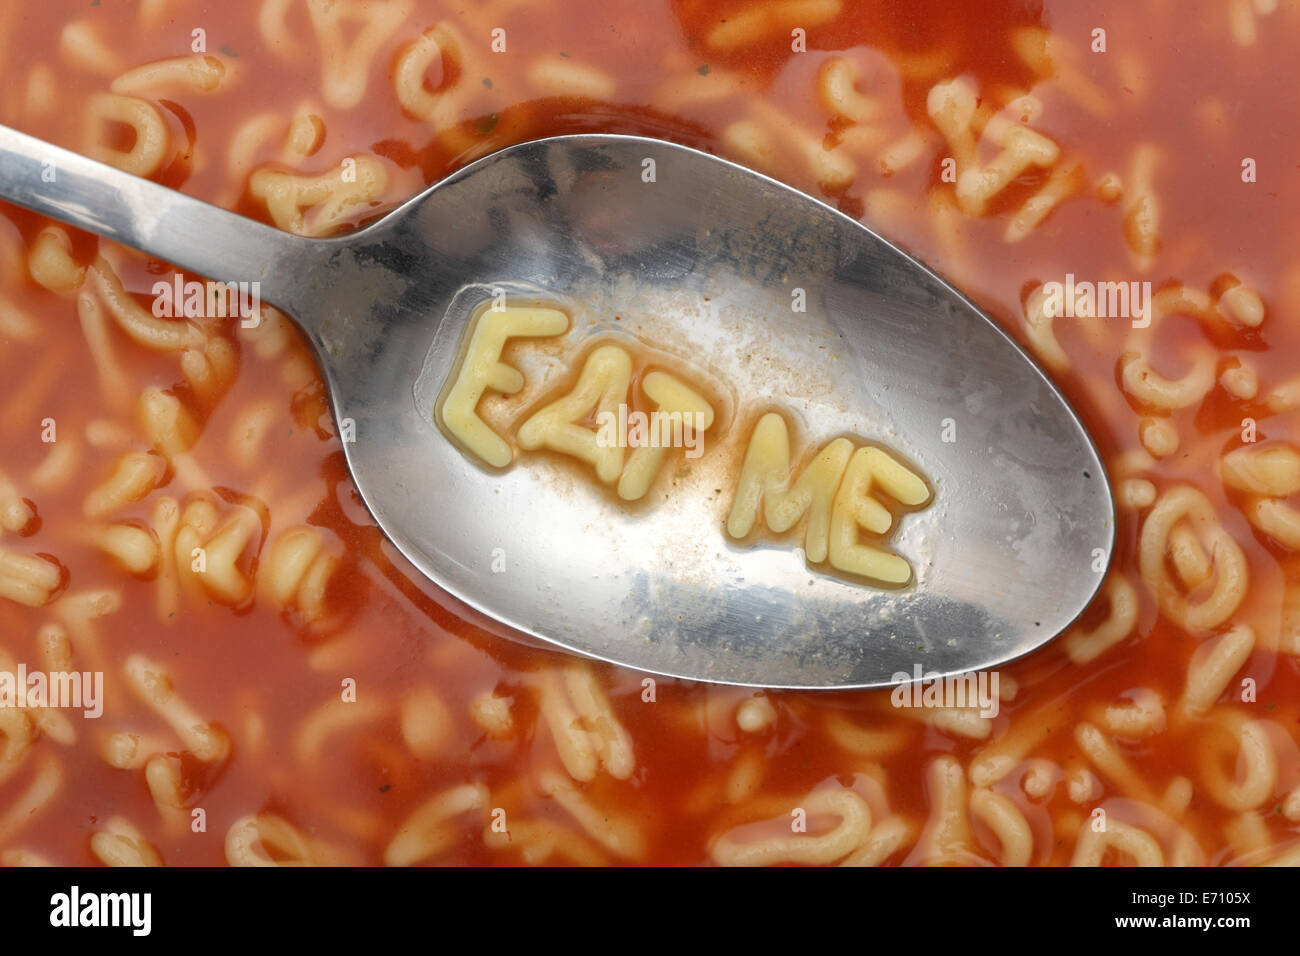 alphabet-letters-in-spoon-spell-out-eat-me-alphabet-soup-pasta-closeup-E7105X.jpg